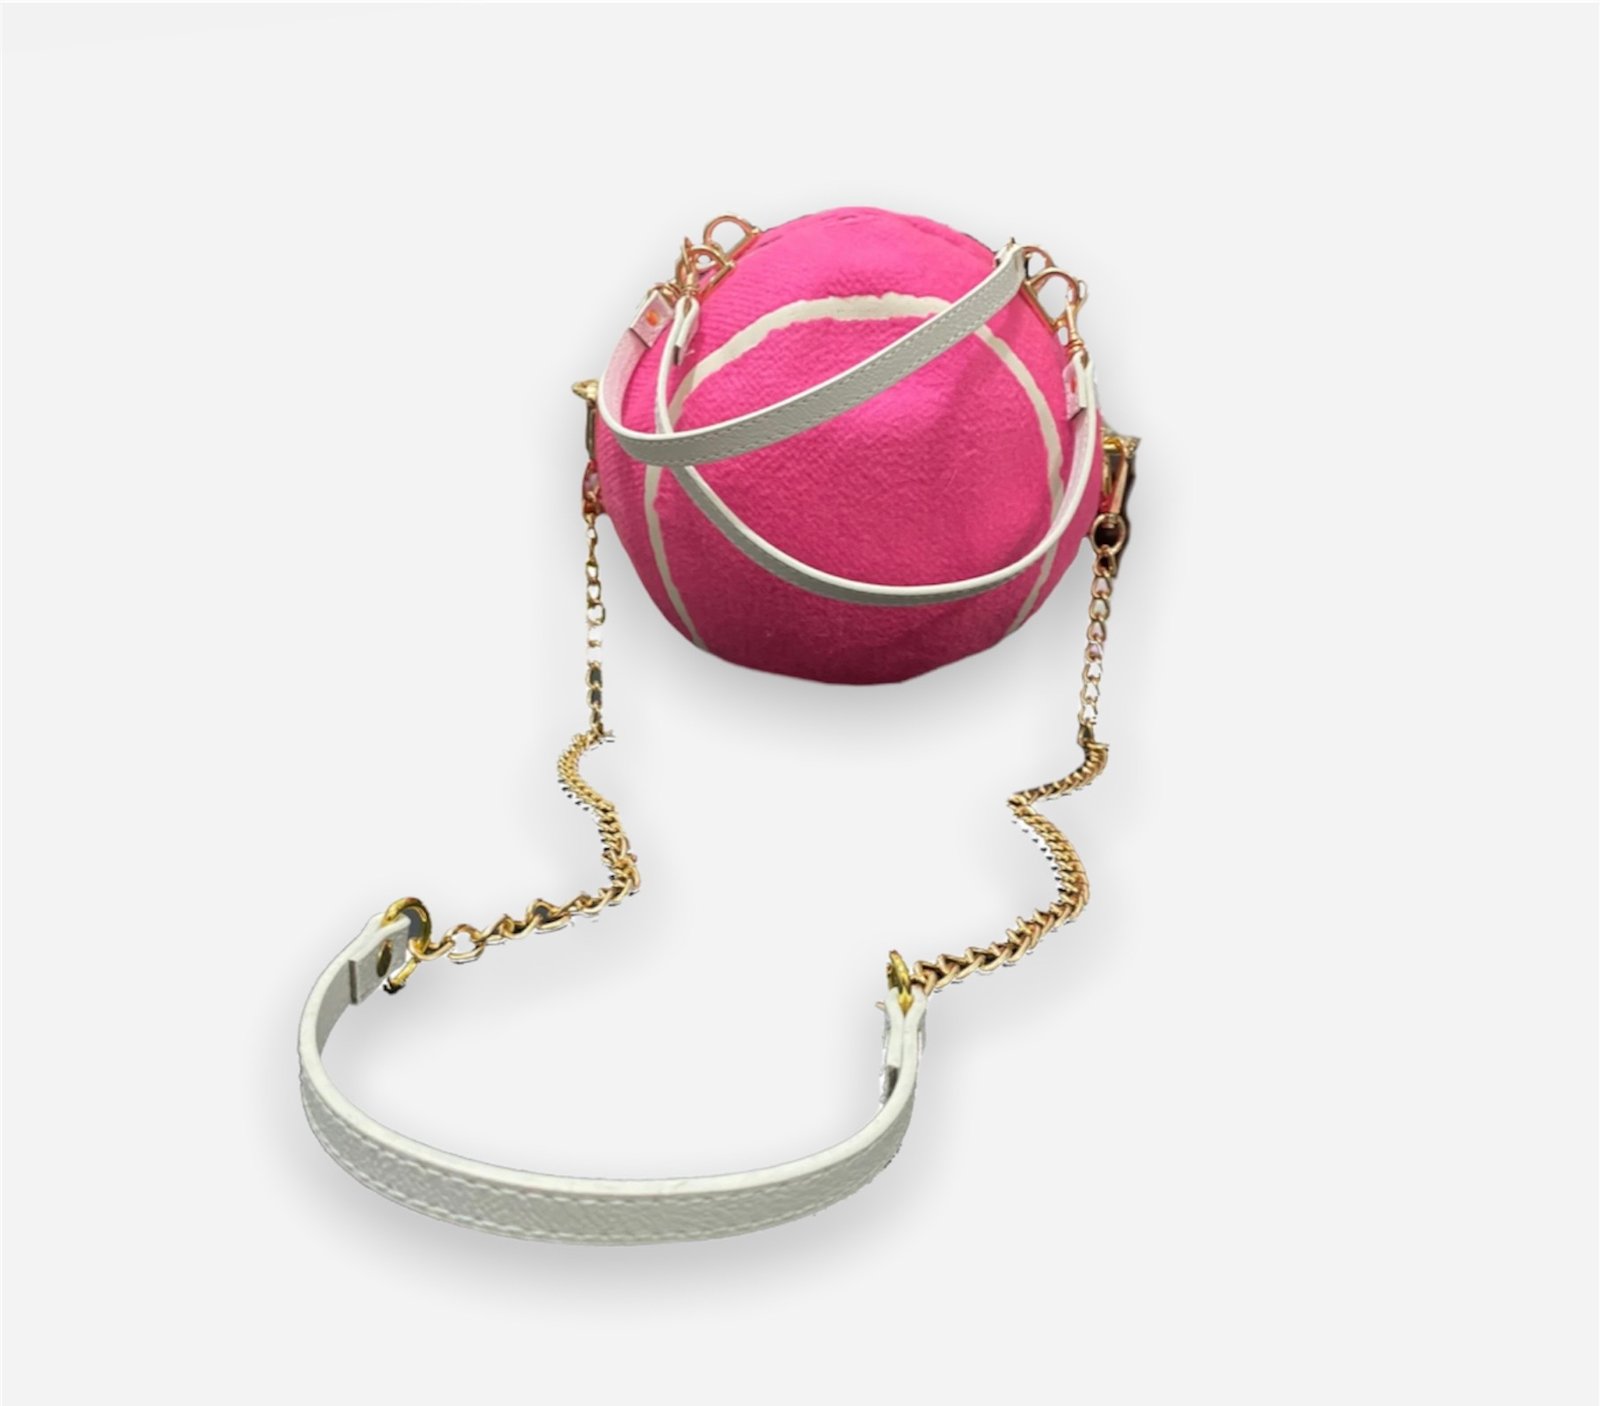 CHGBMOK Bags for Women Personalized Round Ball Bag Chain Football Bag  All-Match Satchel Small Bag - Walmart.com